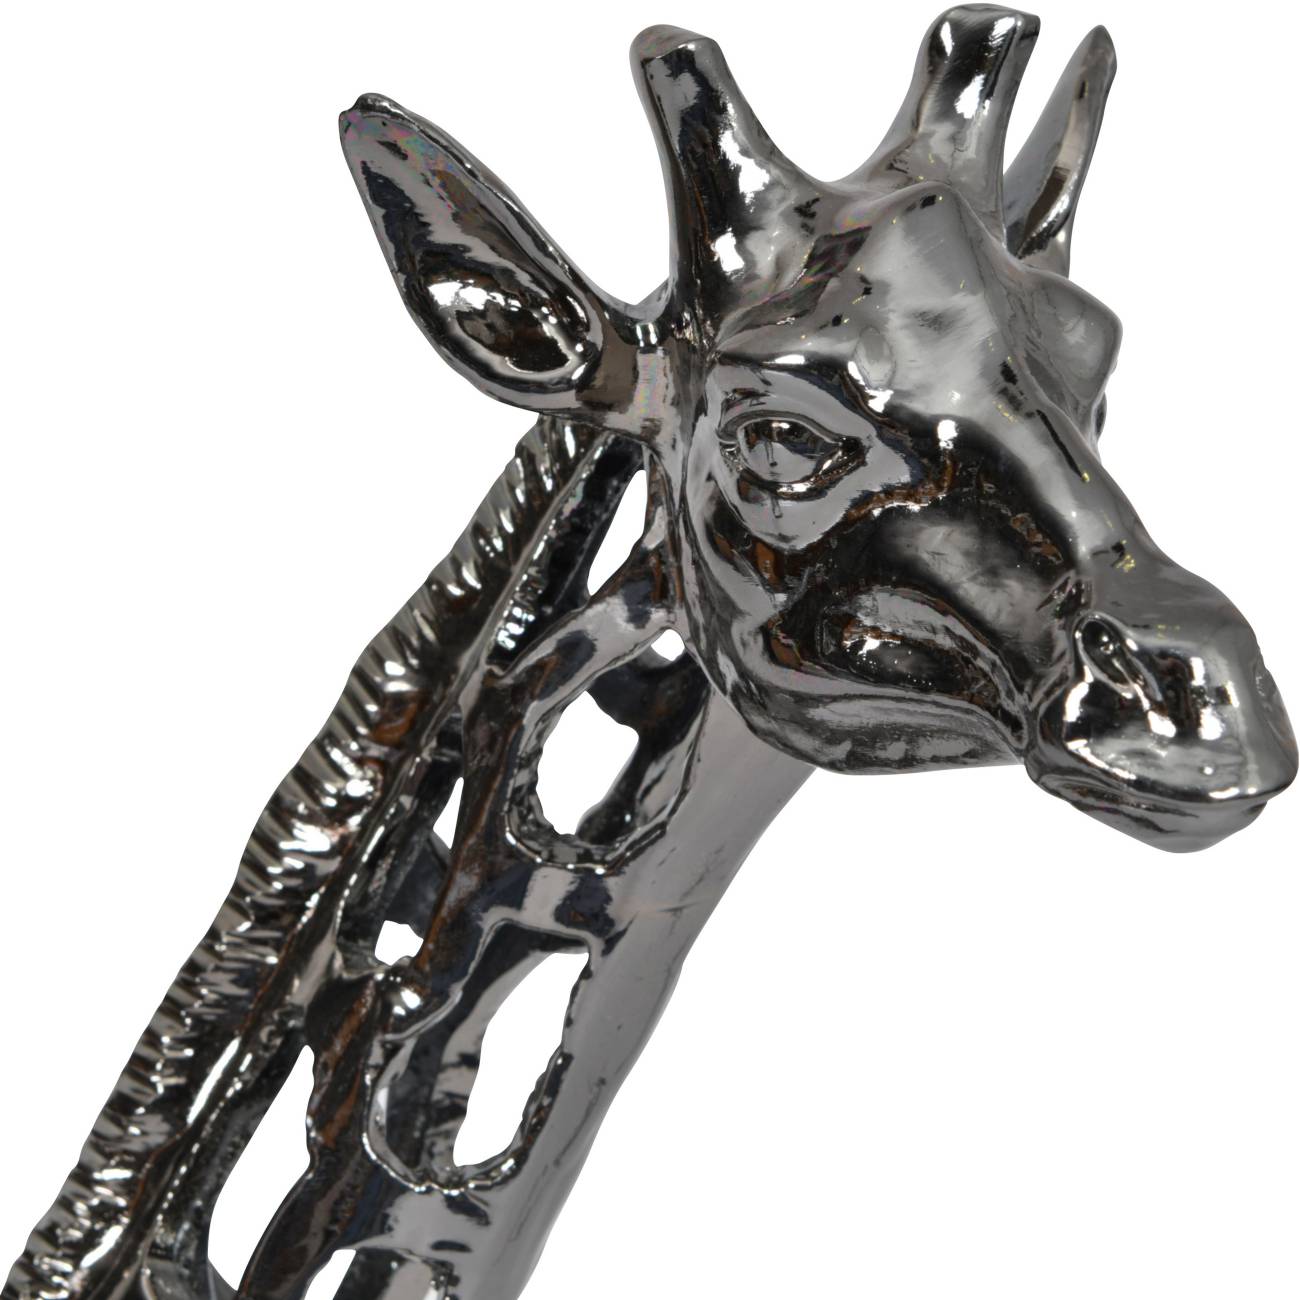 Courtney Black Nickel Hollow Giraffe 70cm Sculpture